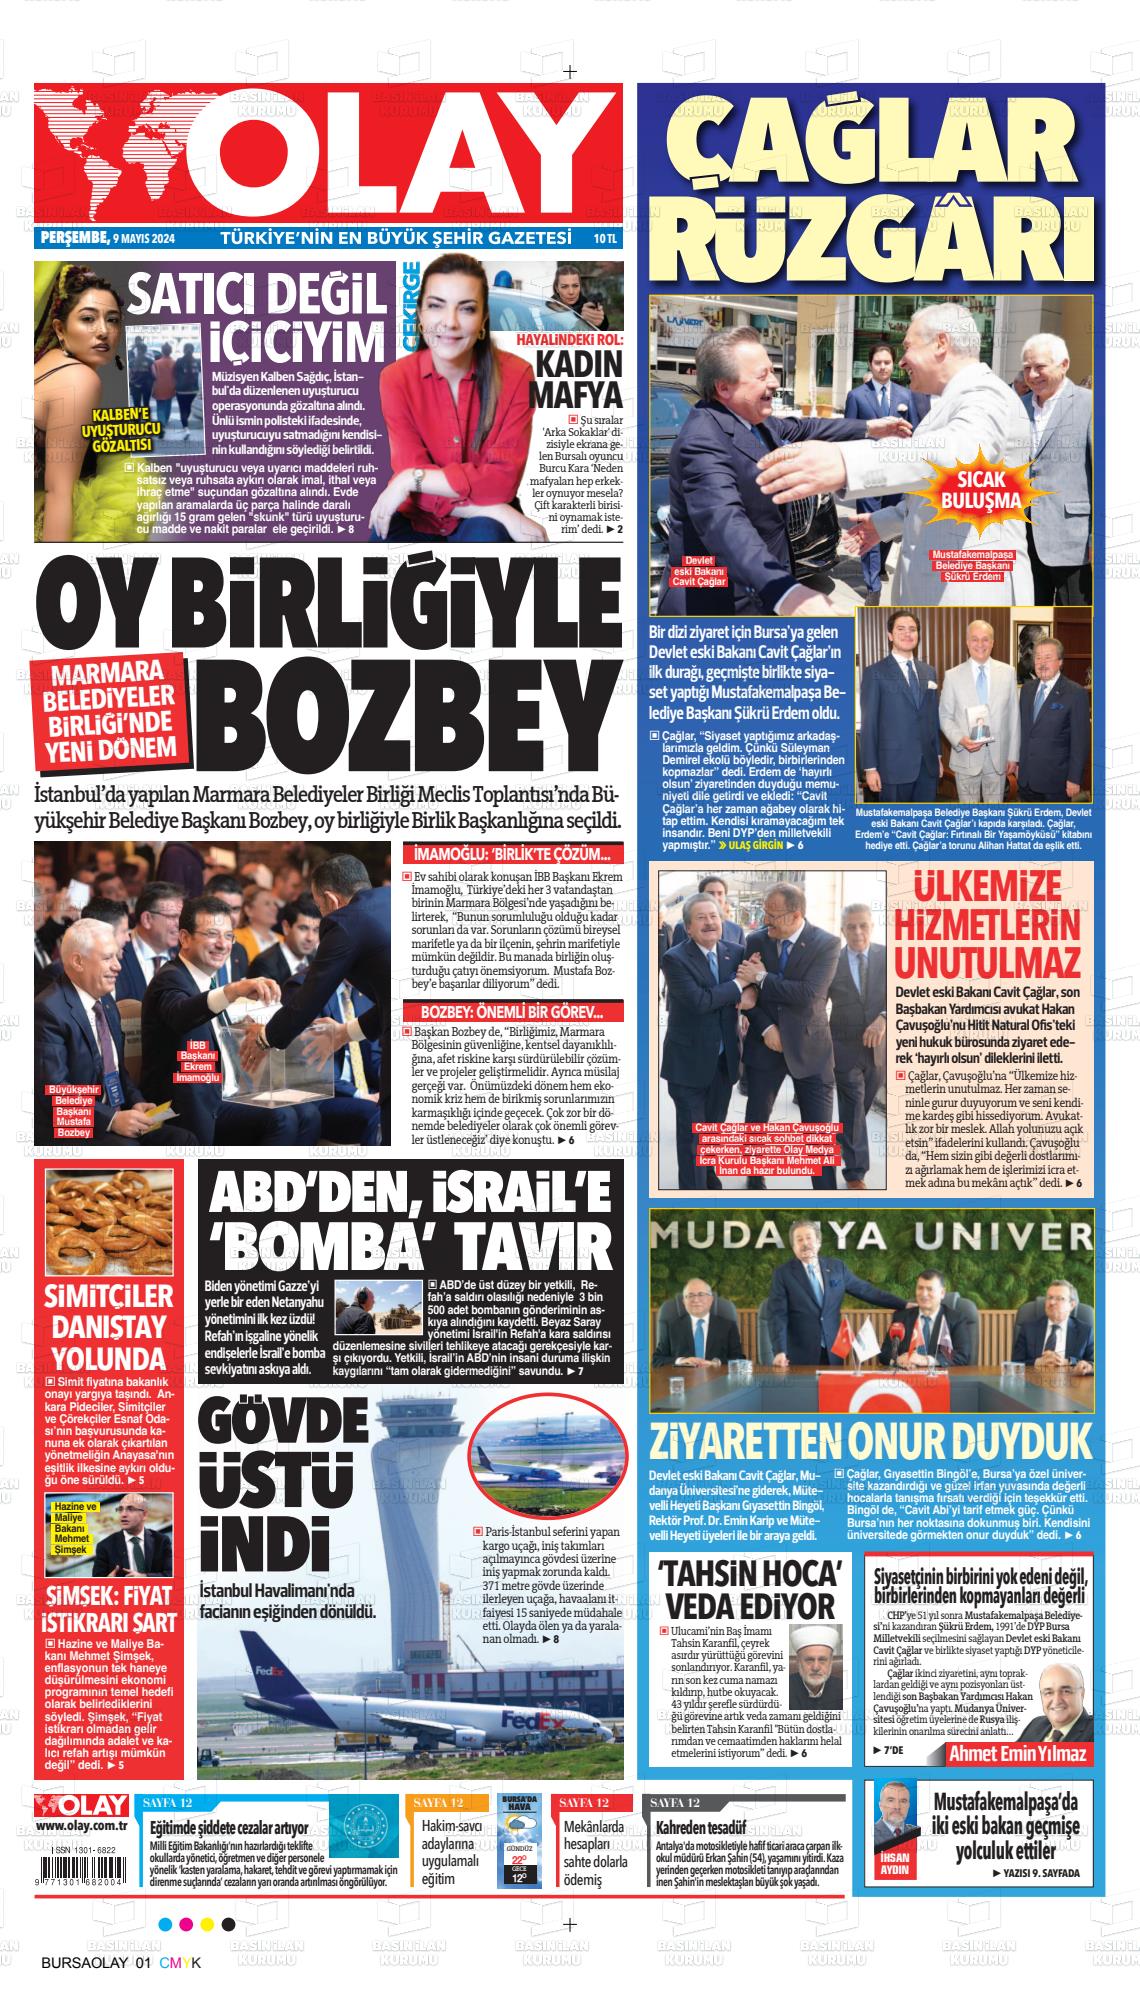 OLAY Gazetesi